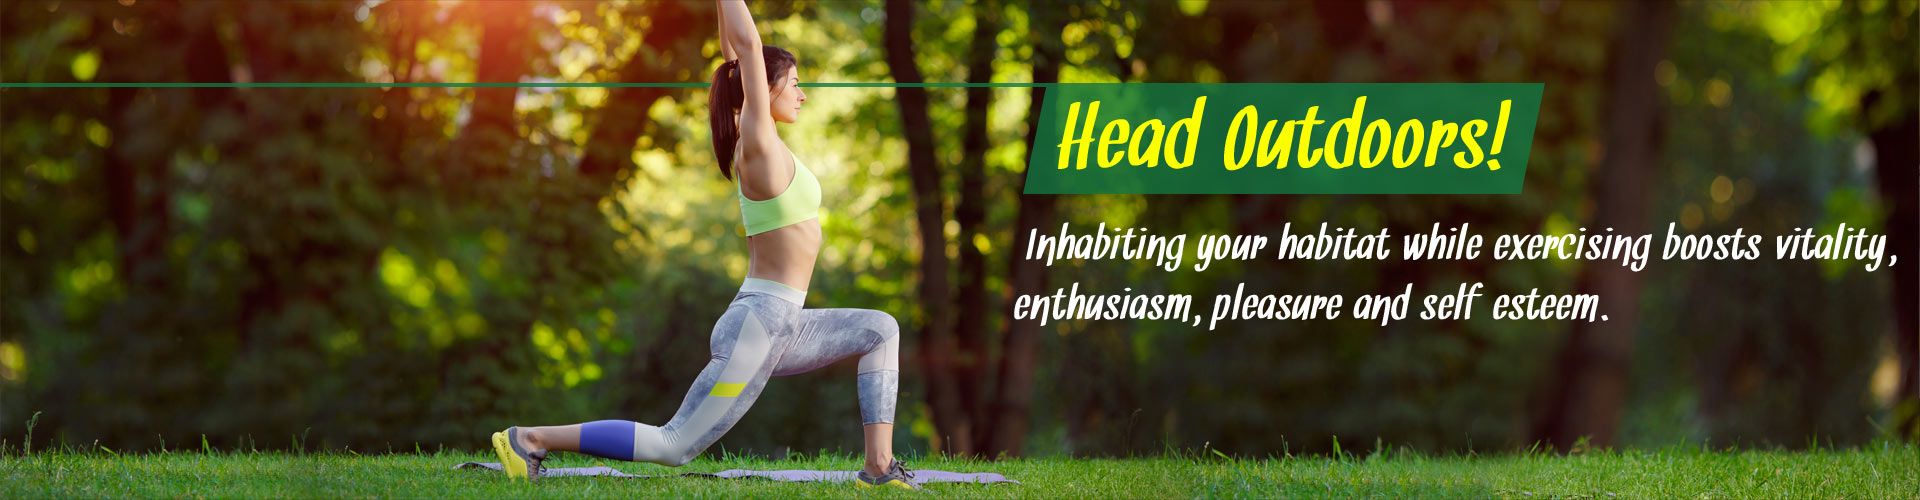 Head Outdoors! Inhabiting your habitat while exercising boosts vitality, enthusiasm, pleasure, and self-esteem.